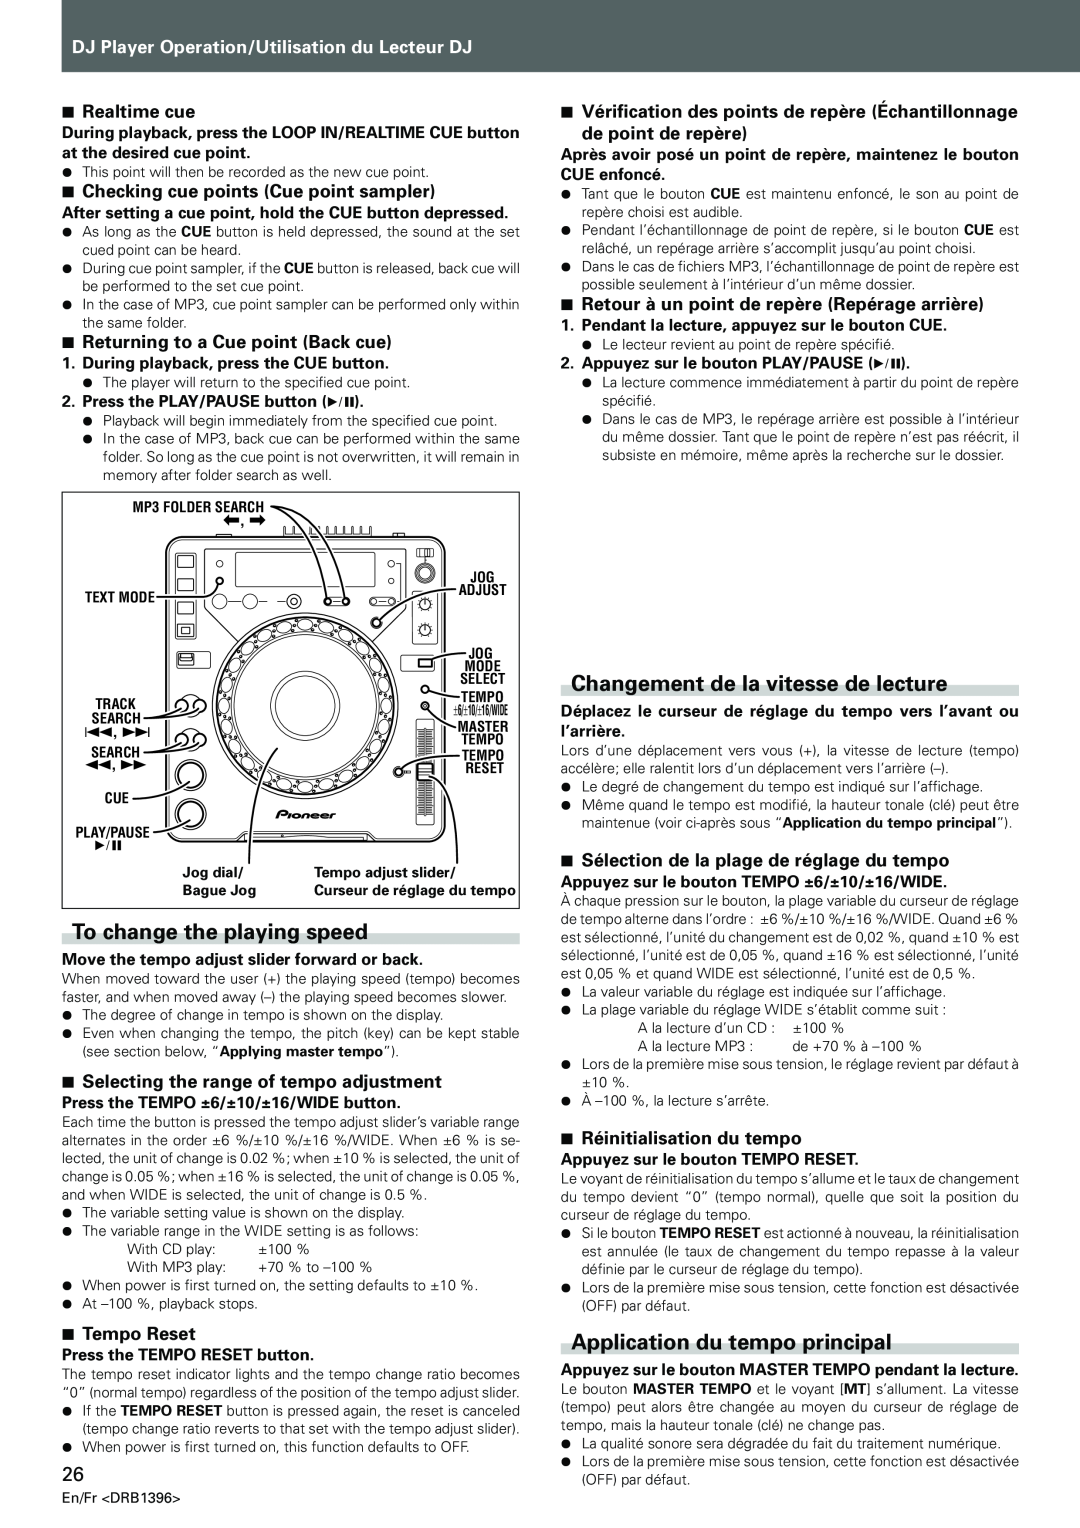 Pioneer CDJ-1000MK3 manual To change the playing speed, Changement de la vitesse de lecture, Application du tempo principal 